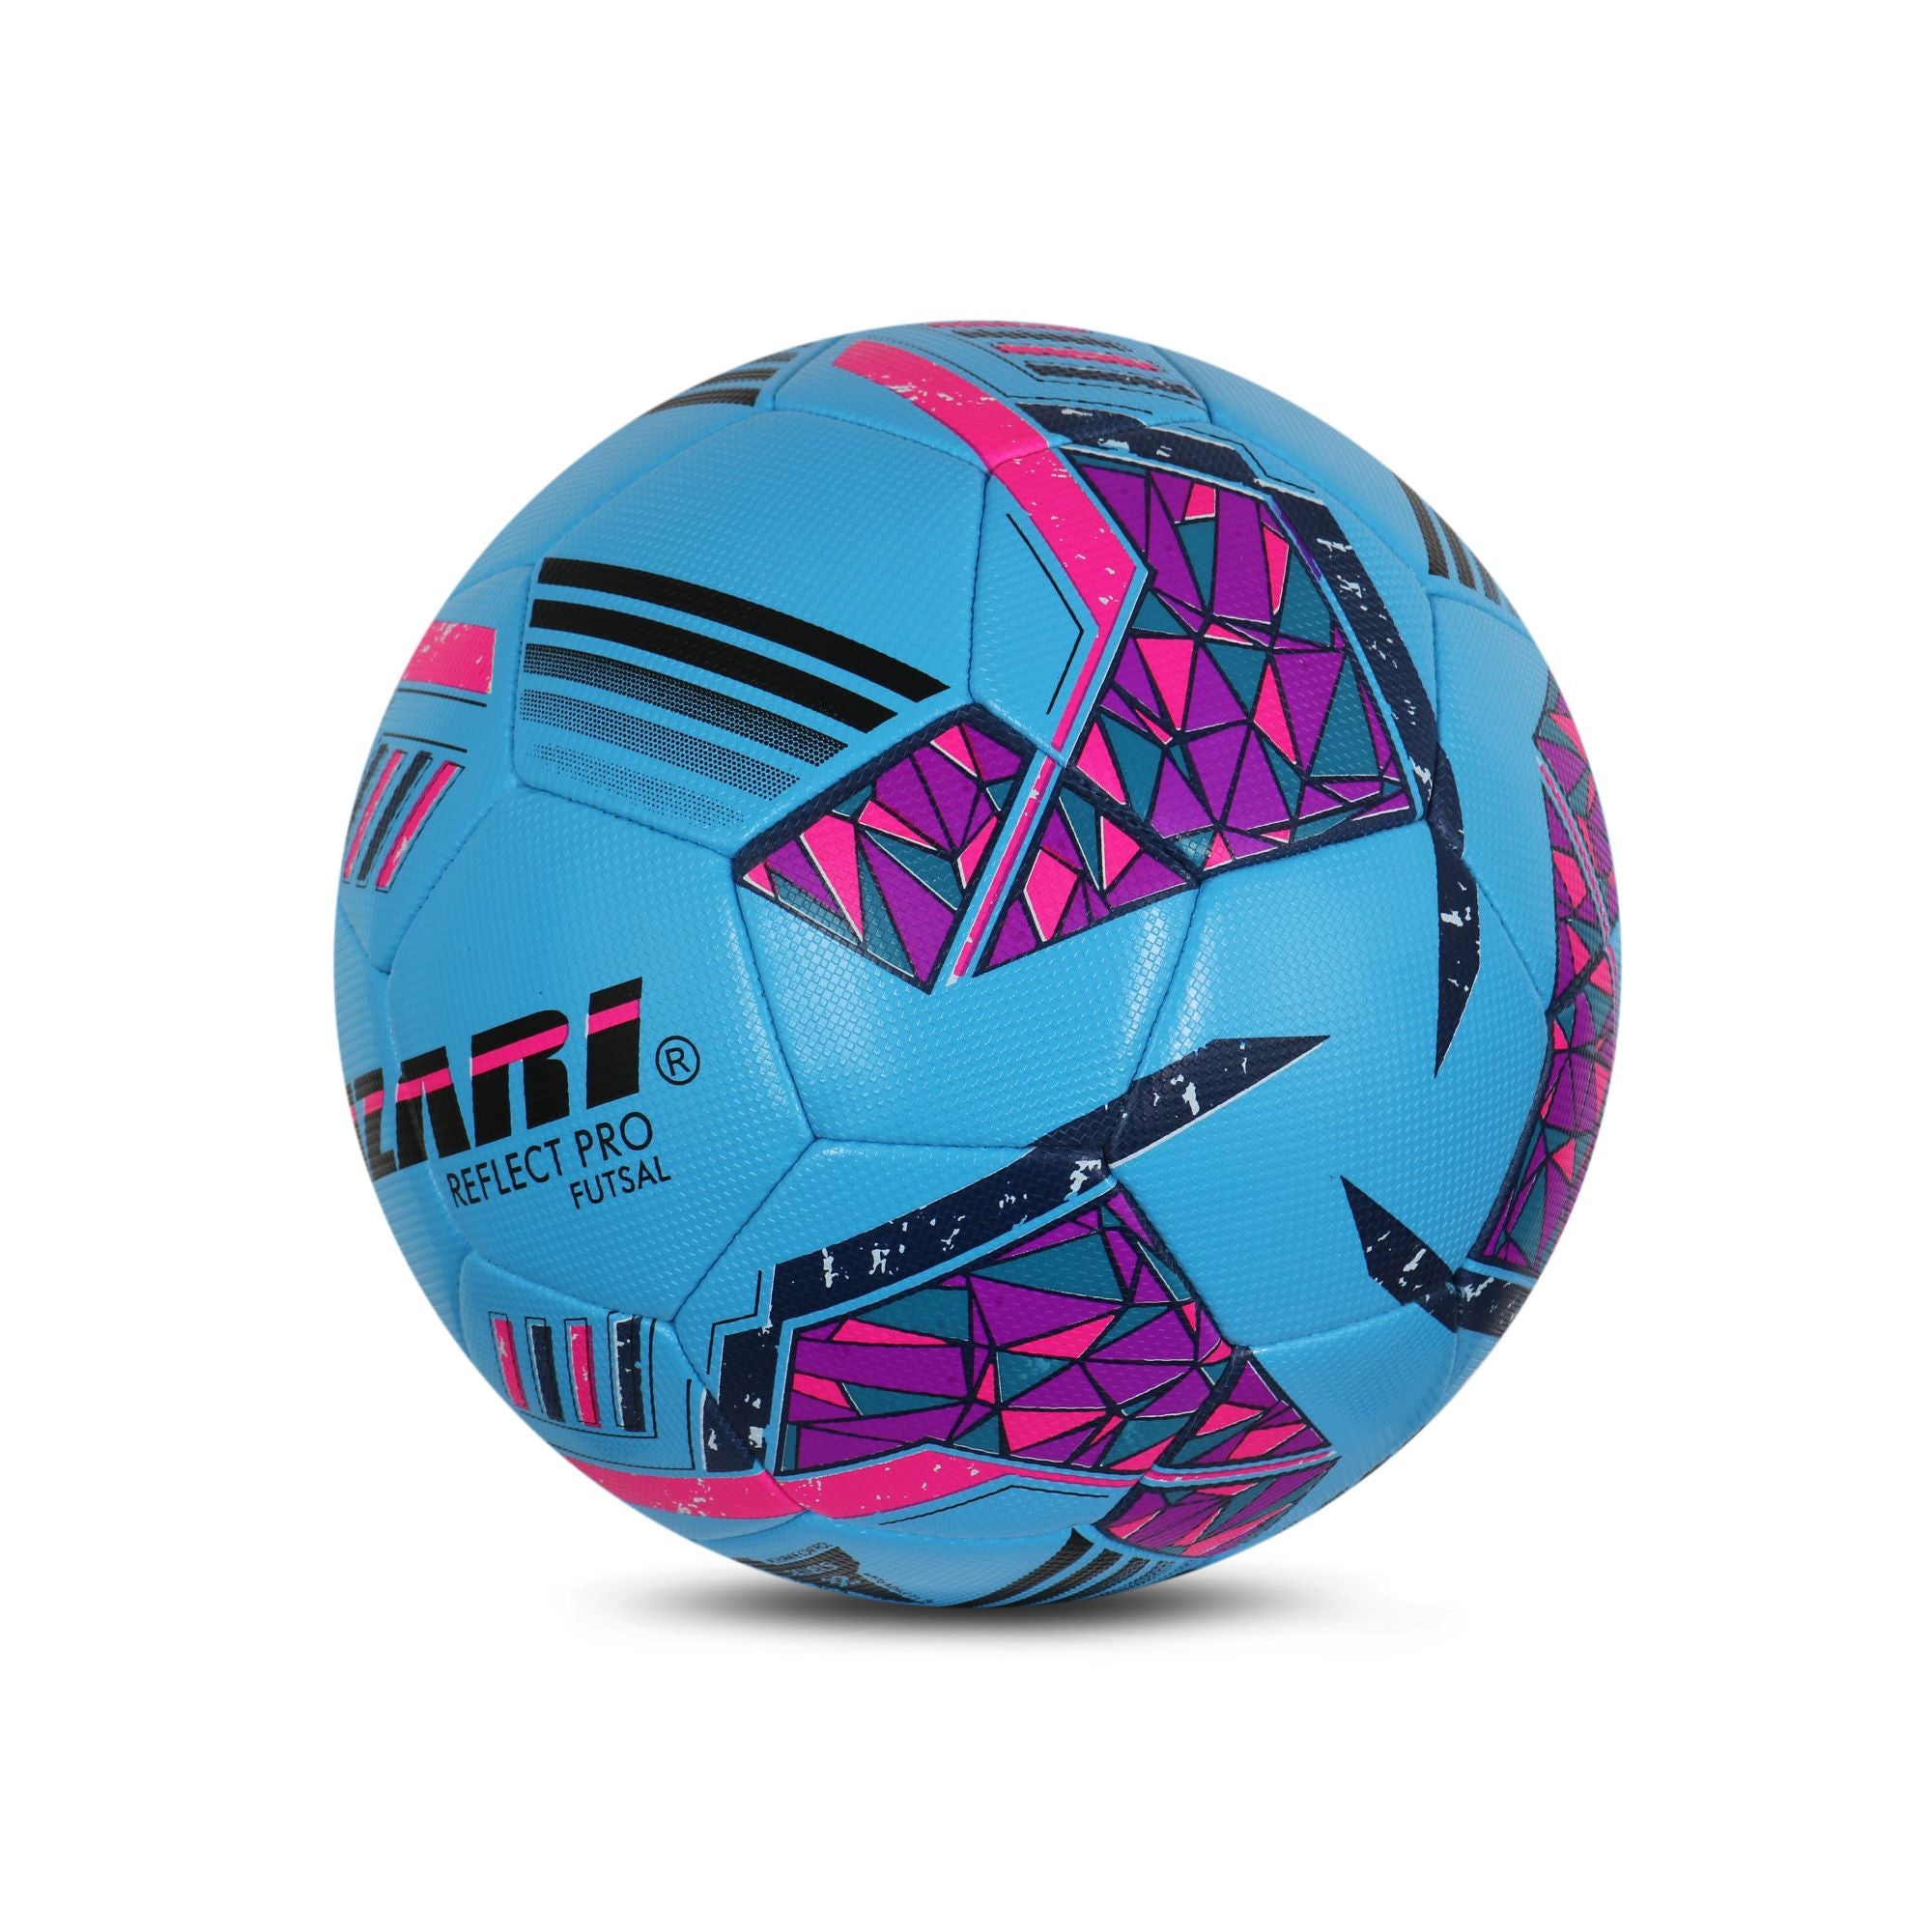 Reflect Pro Premium Indoor Soccer Ball-Sky Blue